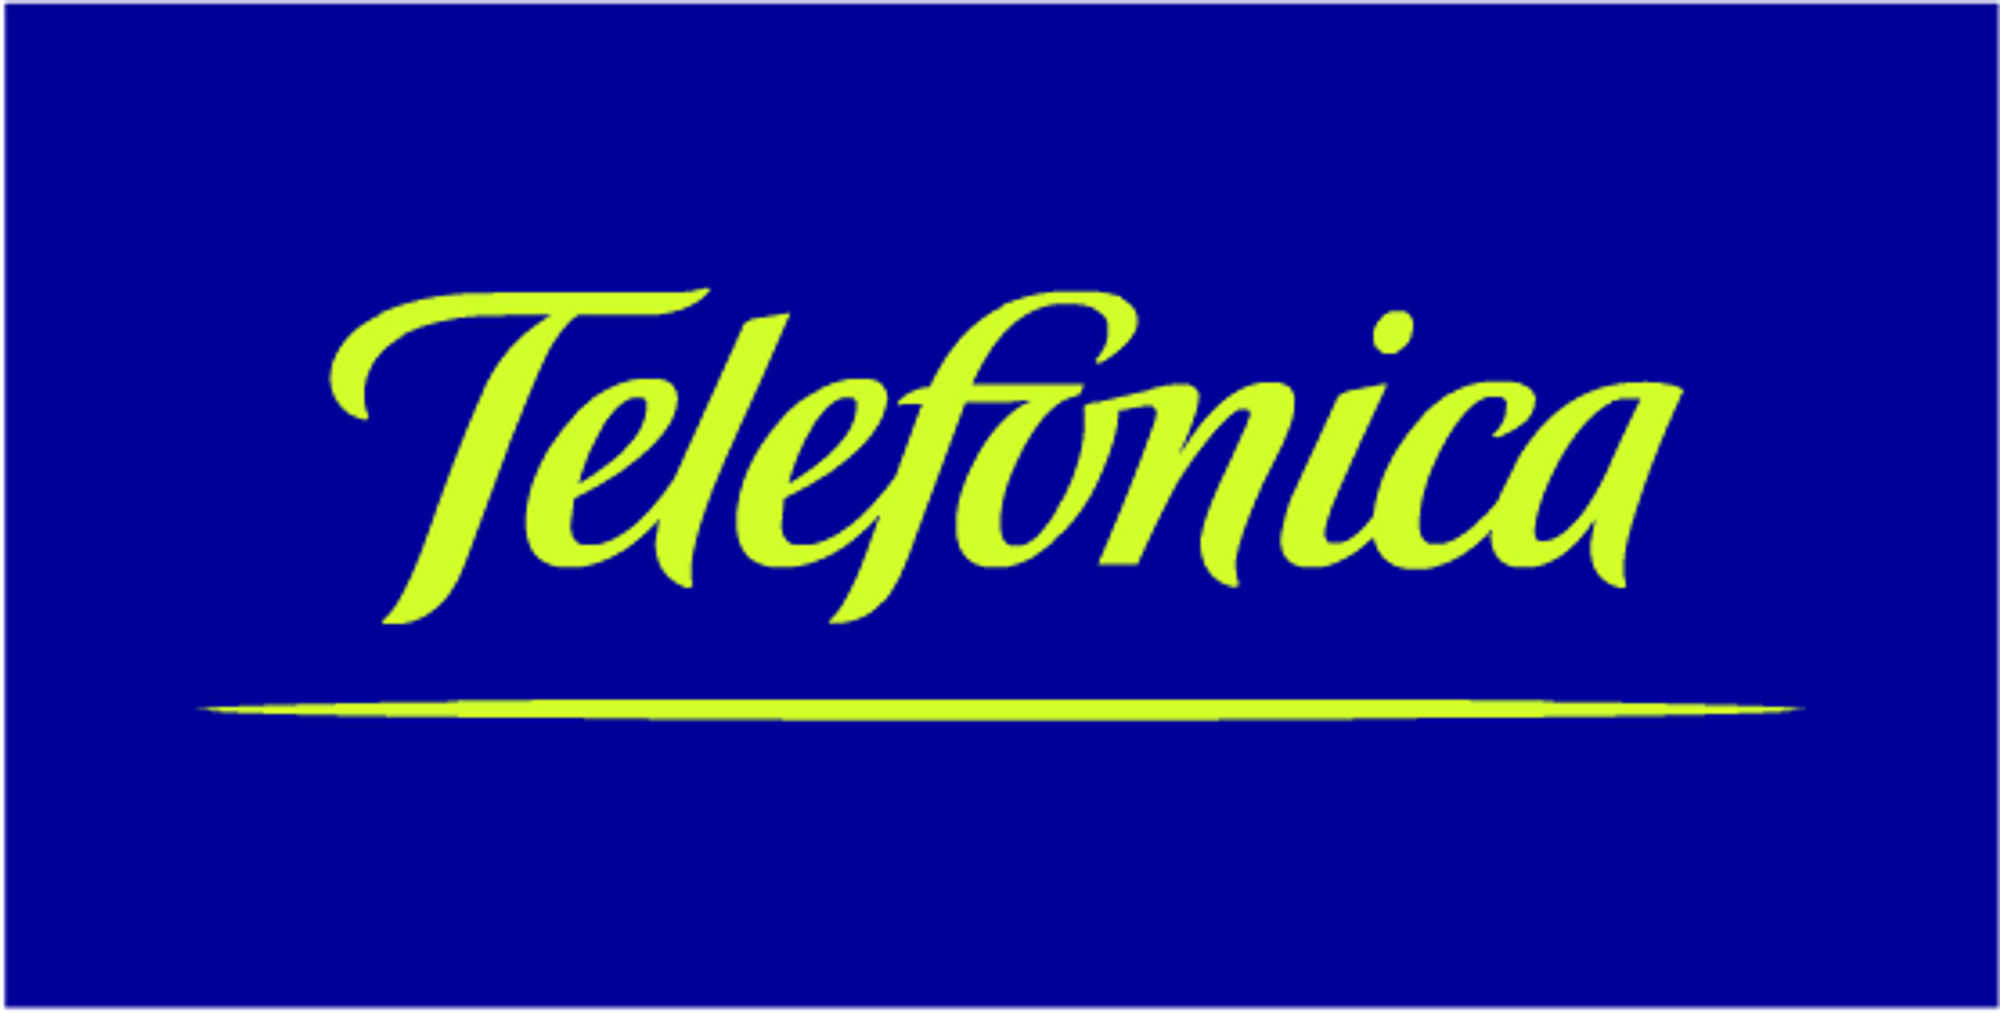 Ny kontrakt med Telefonica